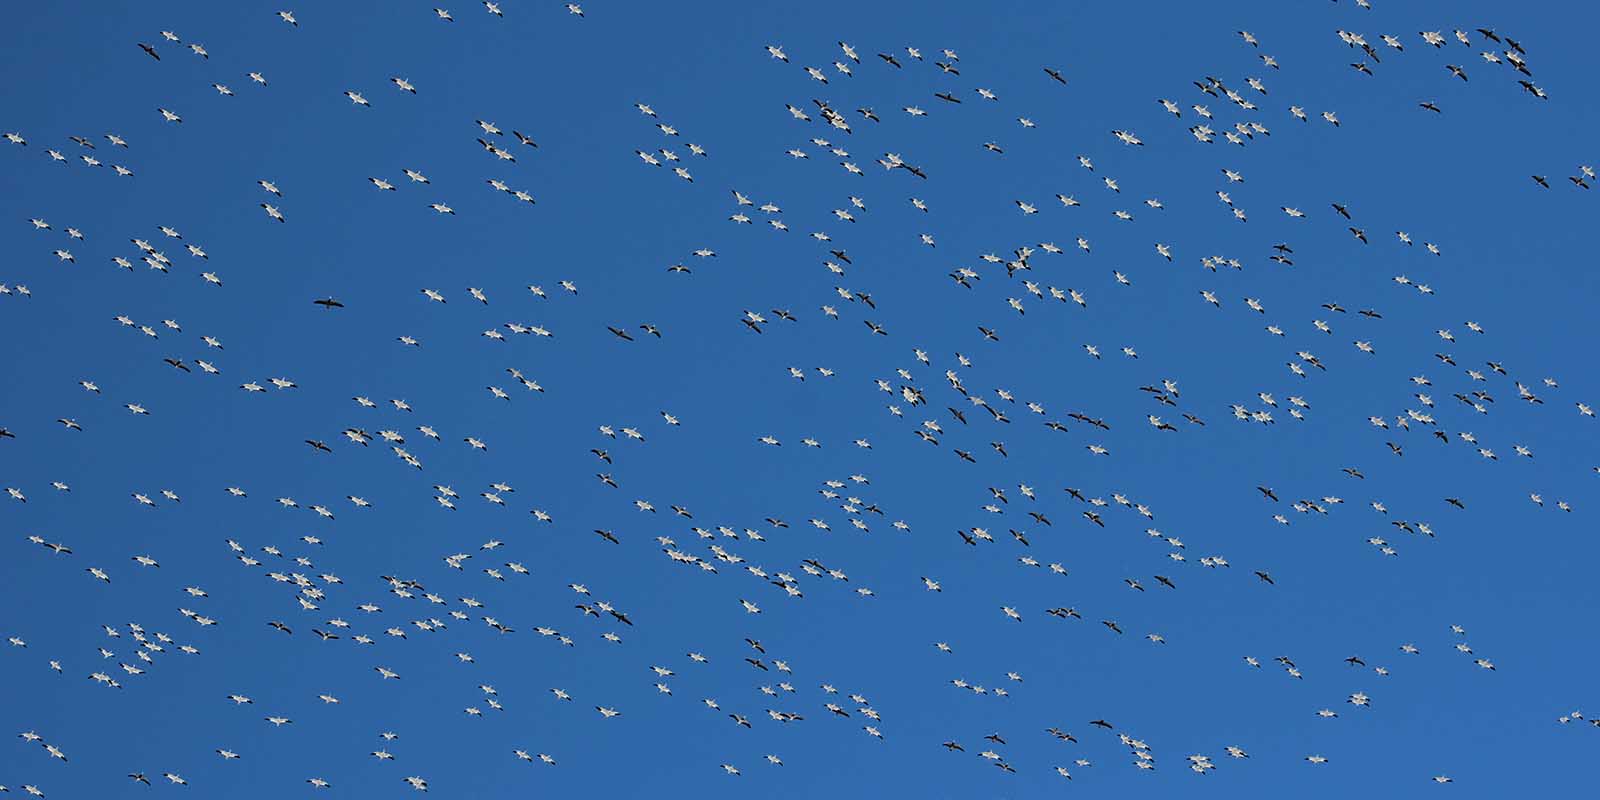 Spring Snow Geese Flock Massive 2018 2